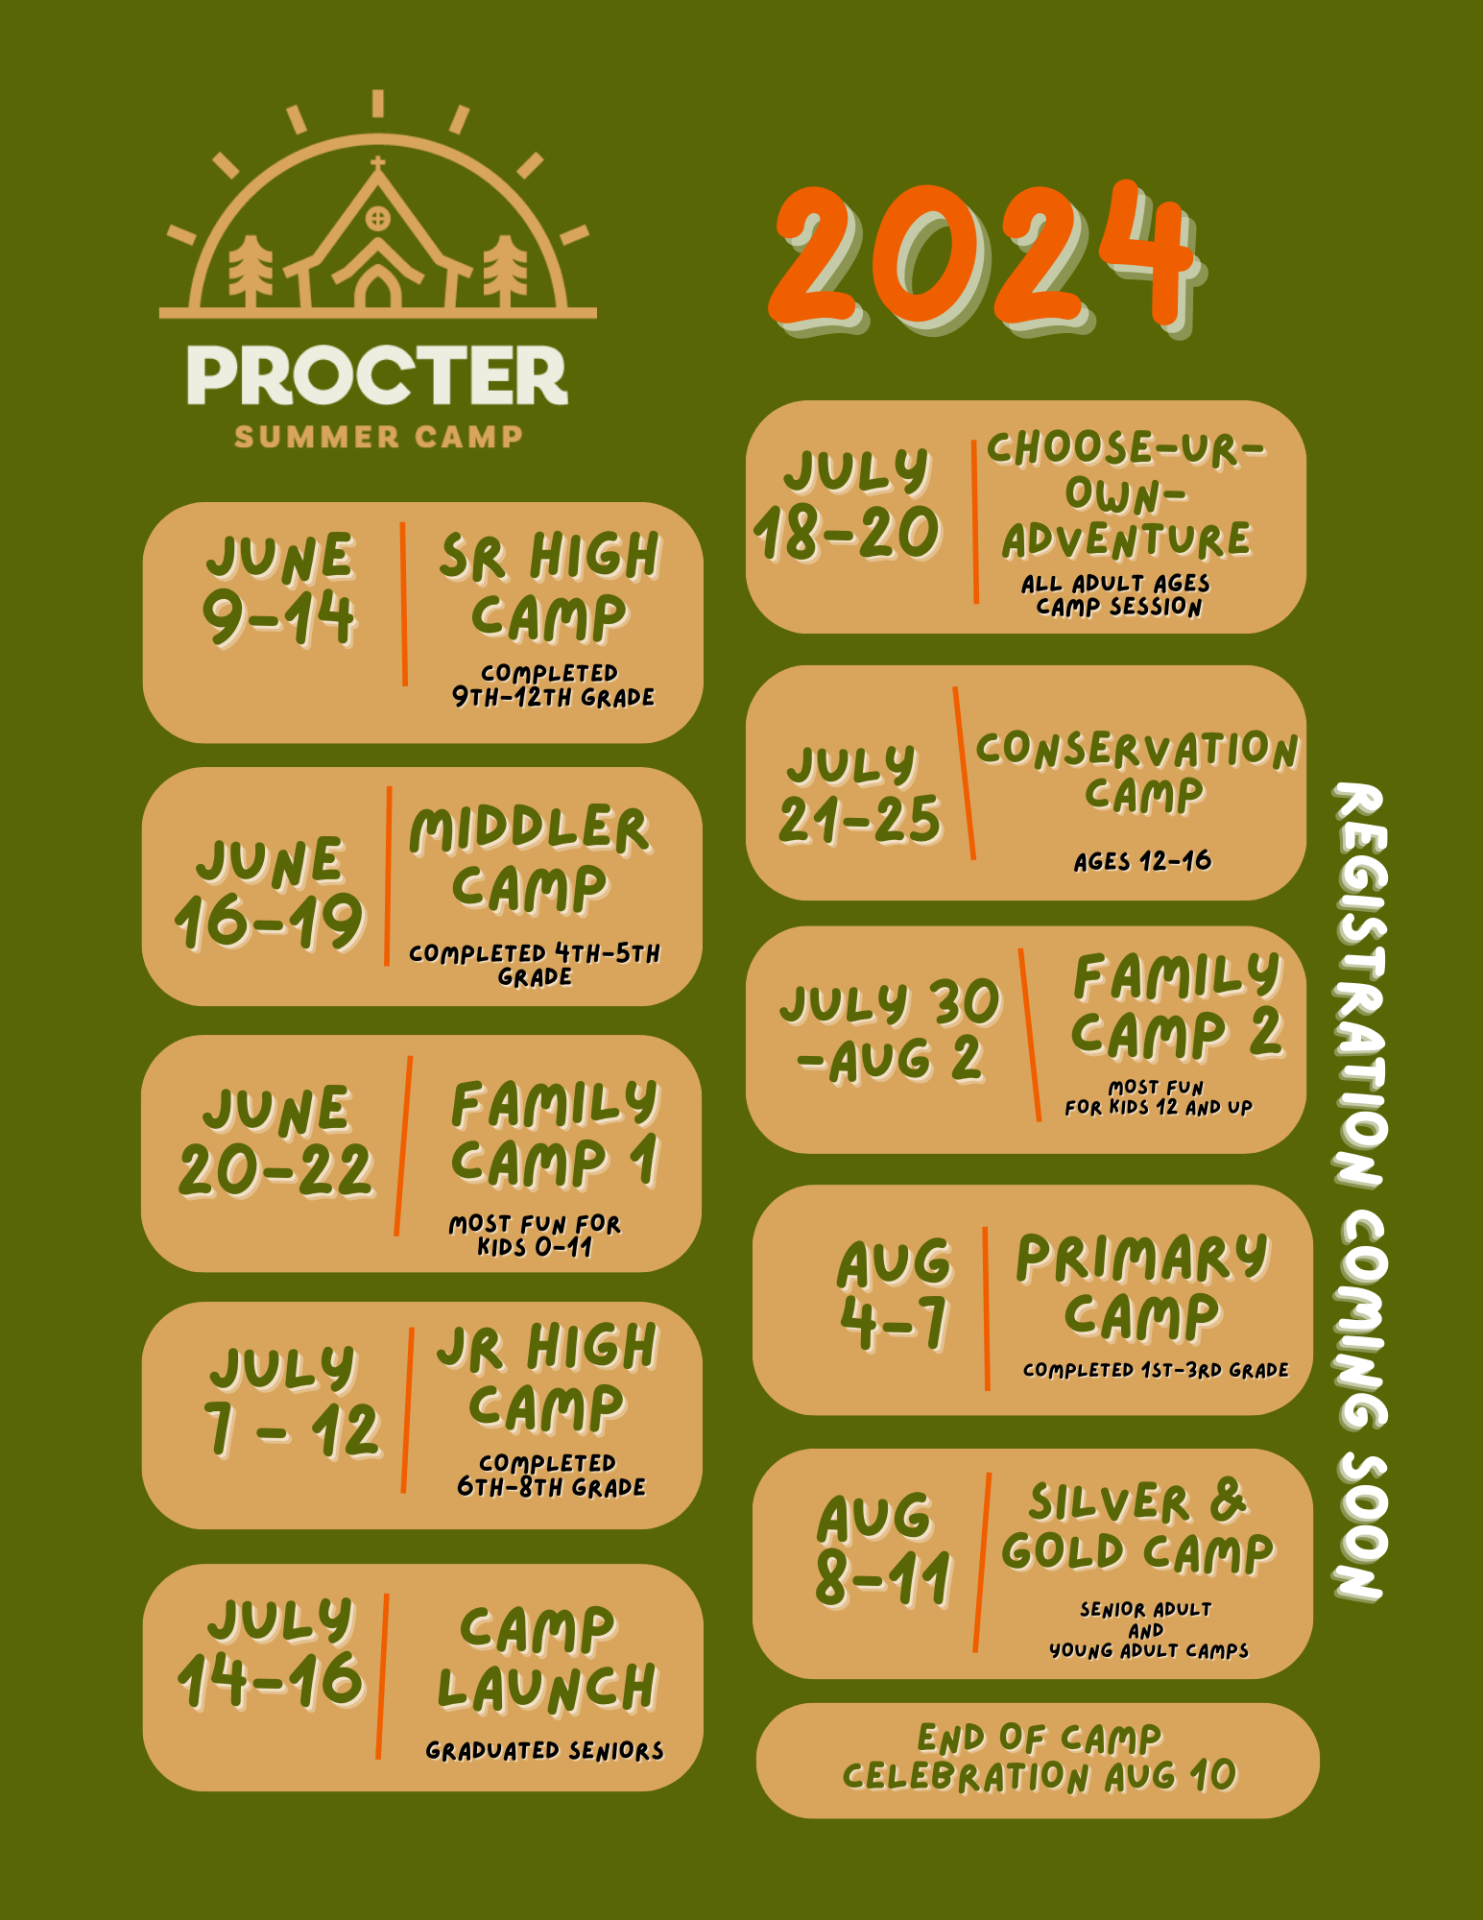 2024 Summer Camp Schedule Announced Dayton Christ Episcopal Church